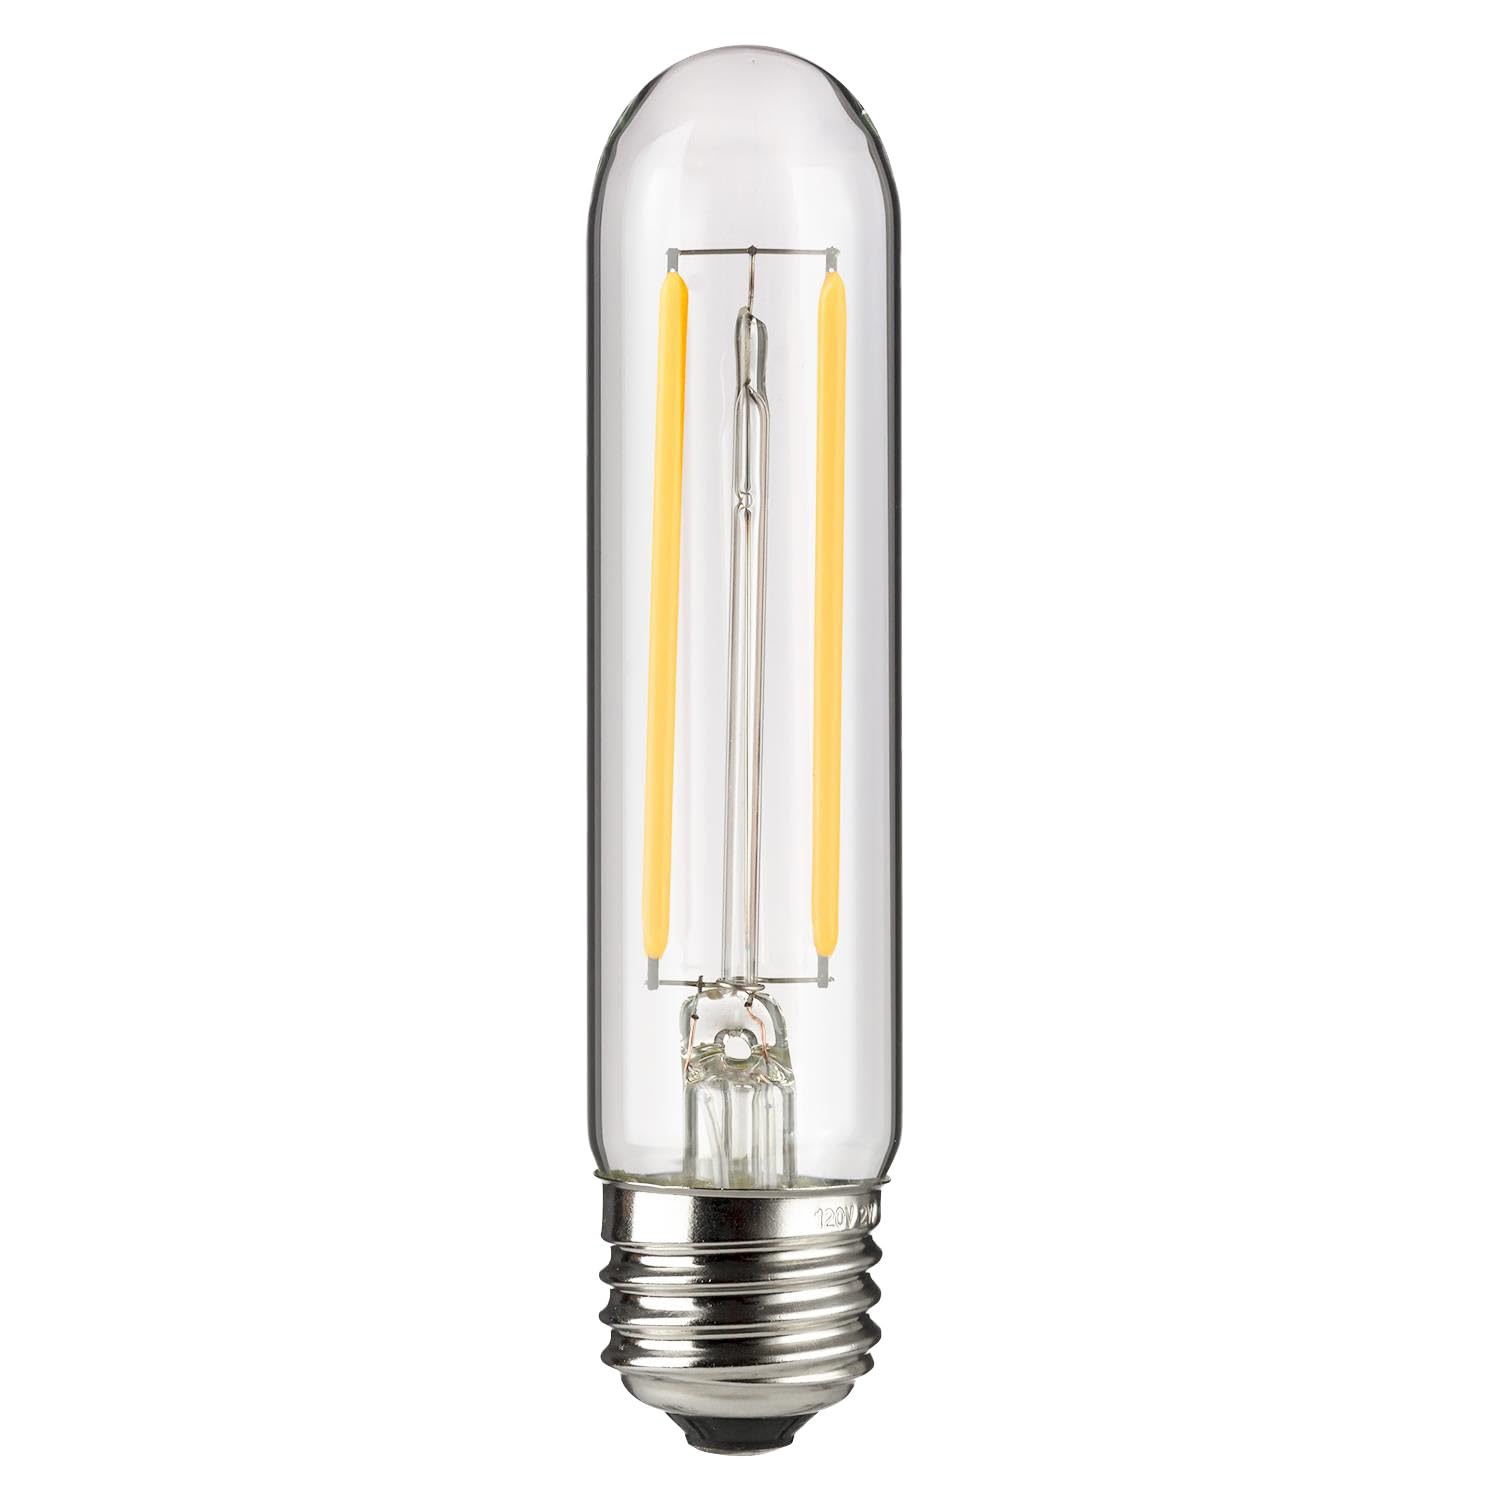 Sunlite LED Filament T10 Tubular Light Bulb, 2 Watts (25W Equivalent), 160 Lumens, Medium E26 Base, 120 Volts, Dimmable, 90 CRI, UL Listed, Clear, 3000K Warm White, 1 Pack